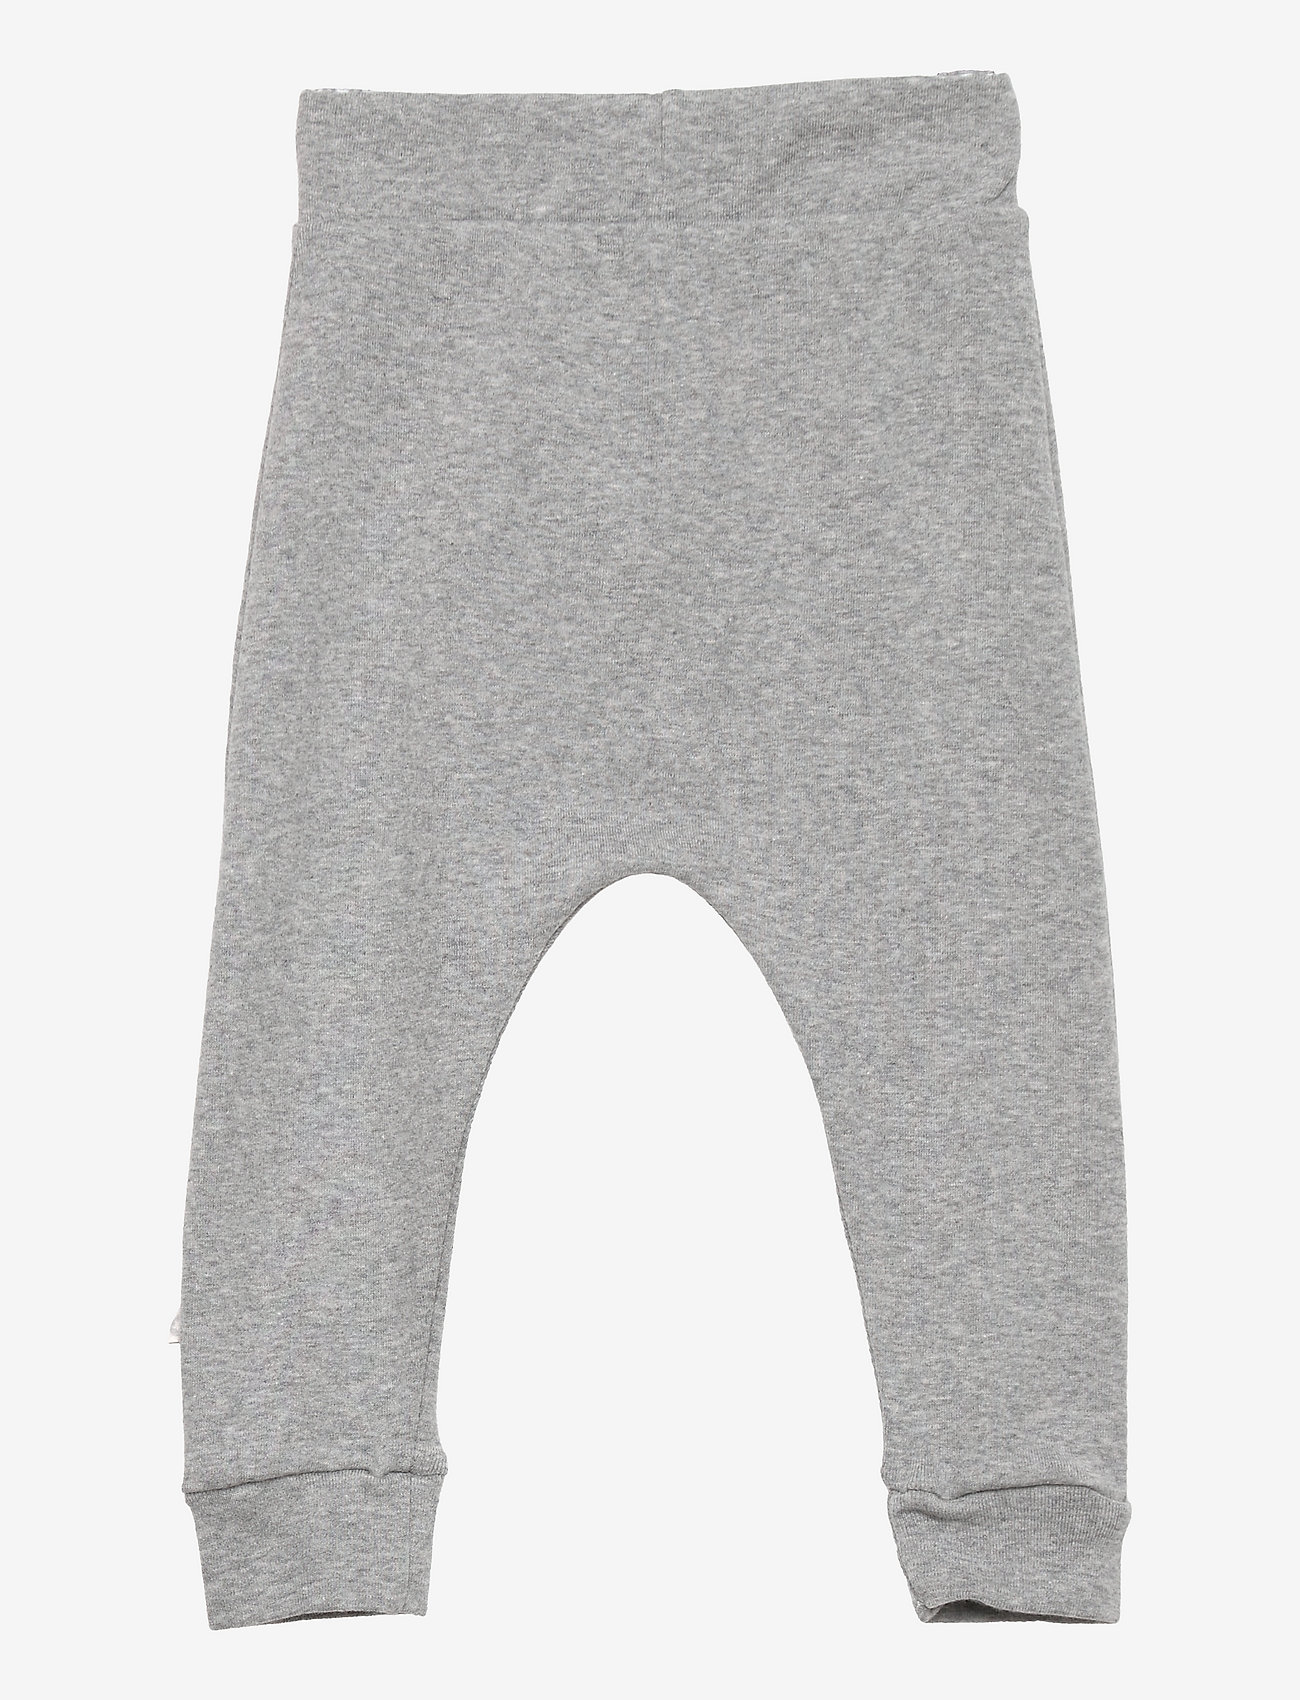 Smallstuff - Pants - lowest prices - light grey - 1